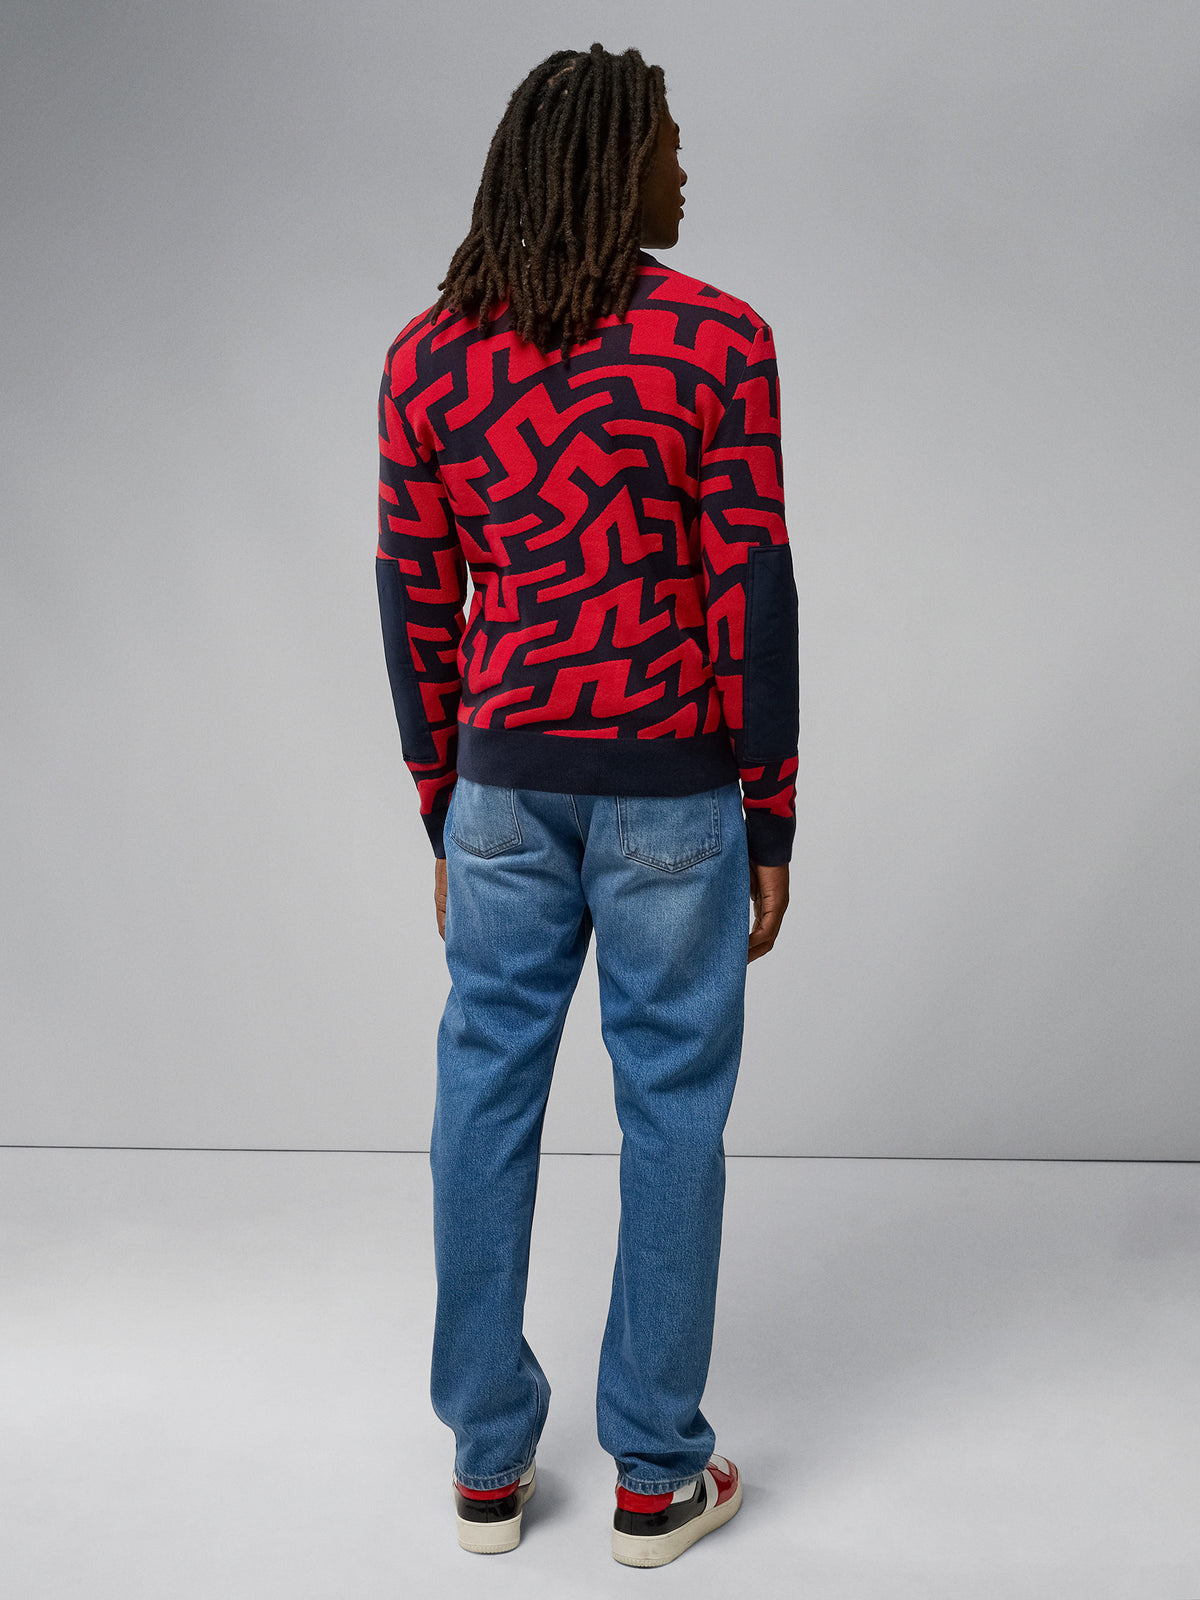 Swirl Knitted Sweater / Bridge Swirl Red